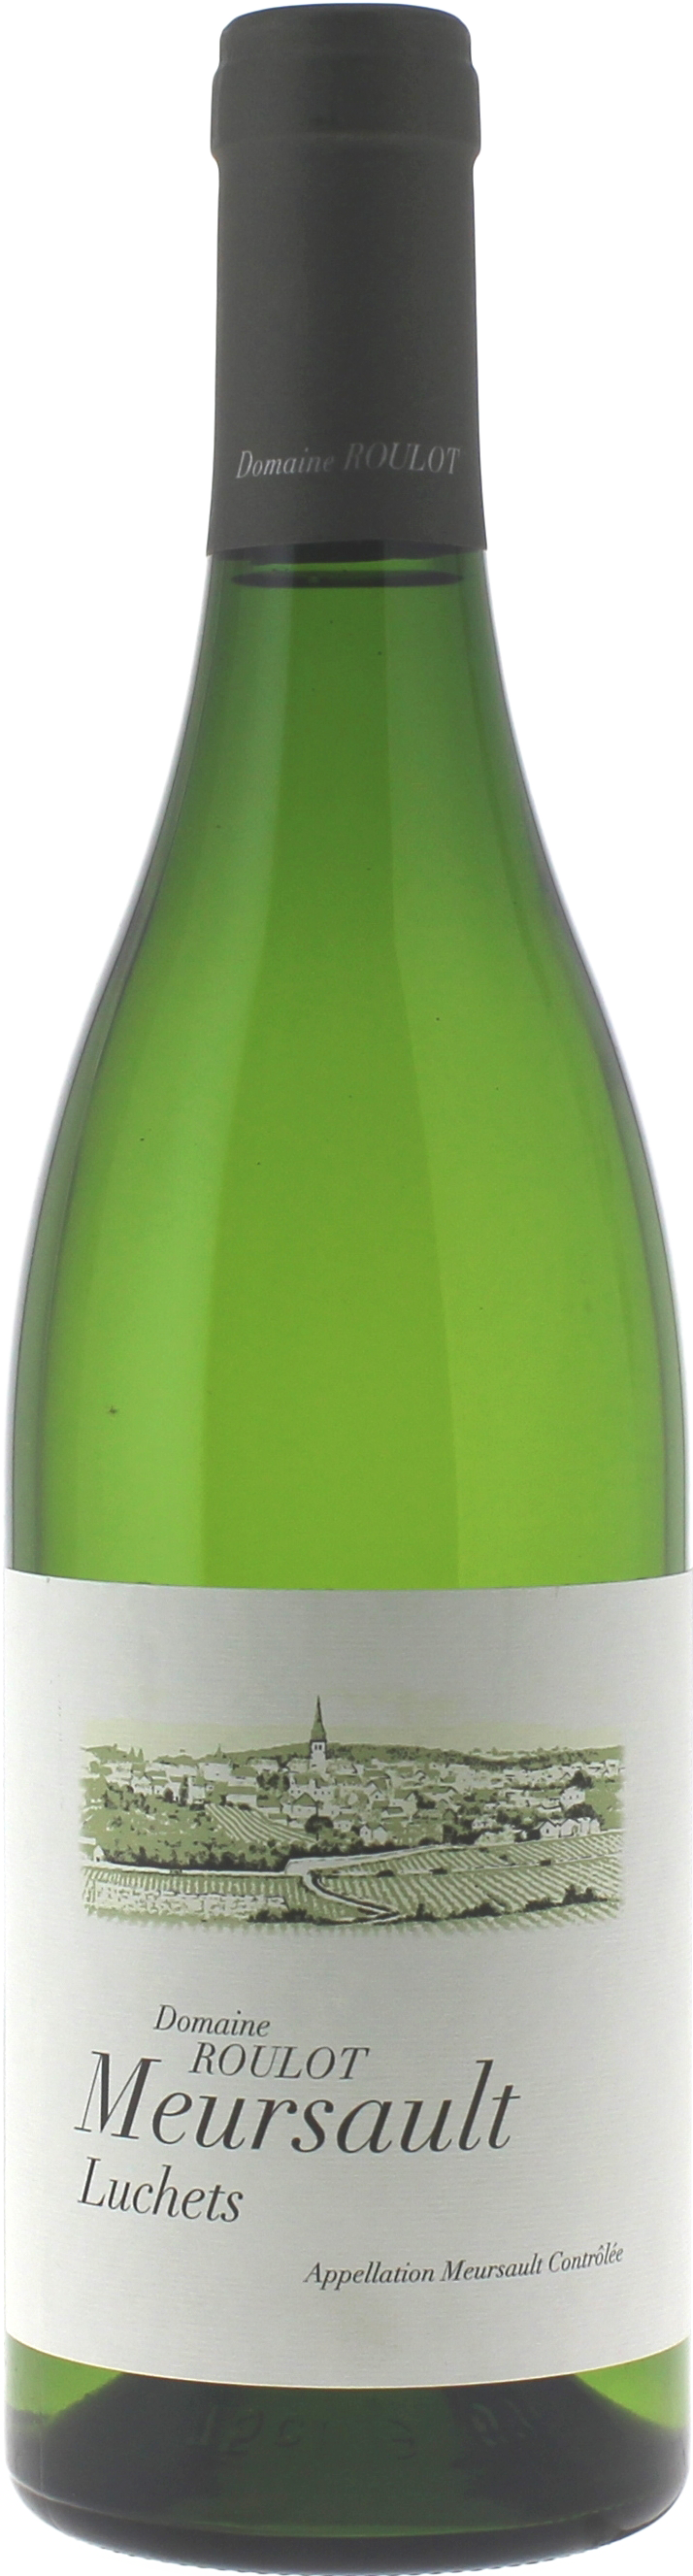 Meursault luchets 2016 Domaine ROULOT Jean Marc, Bourgogne blanc